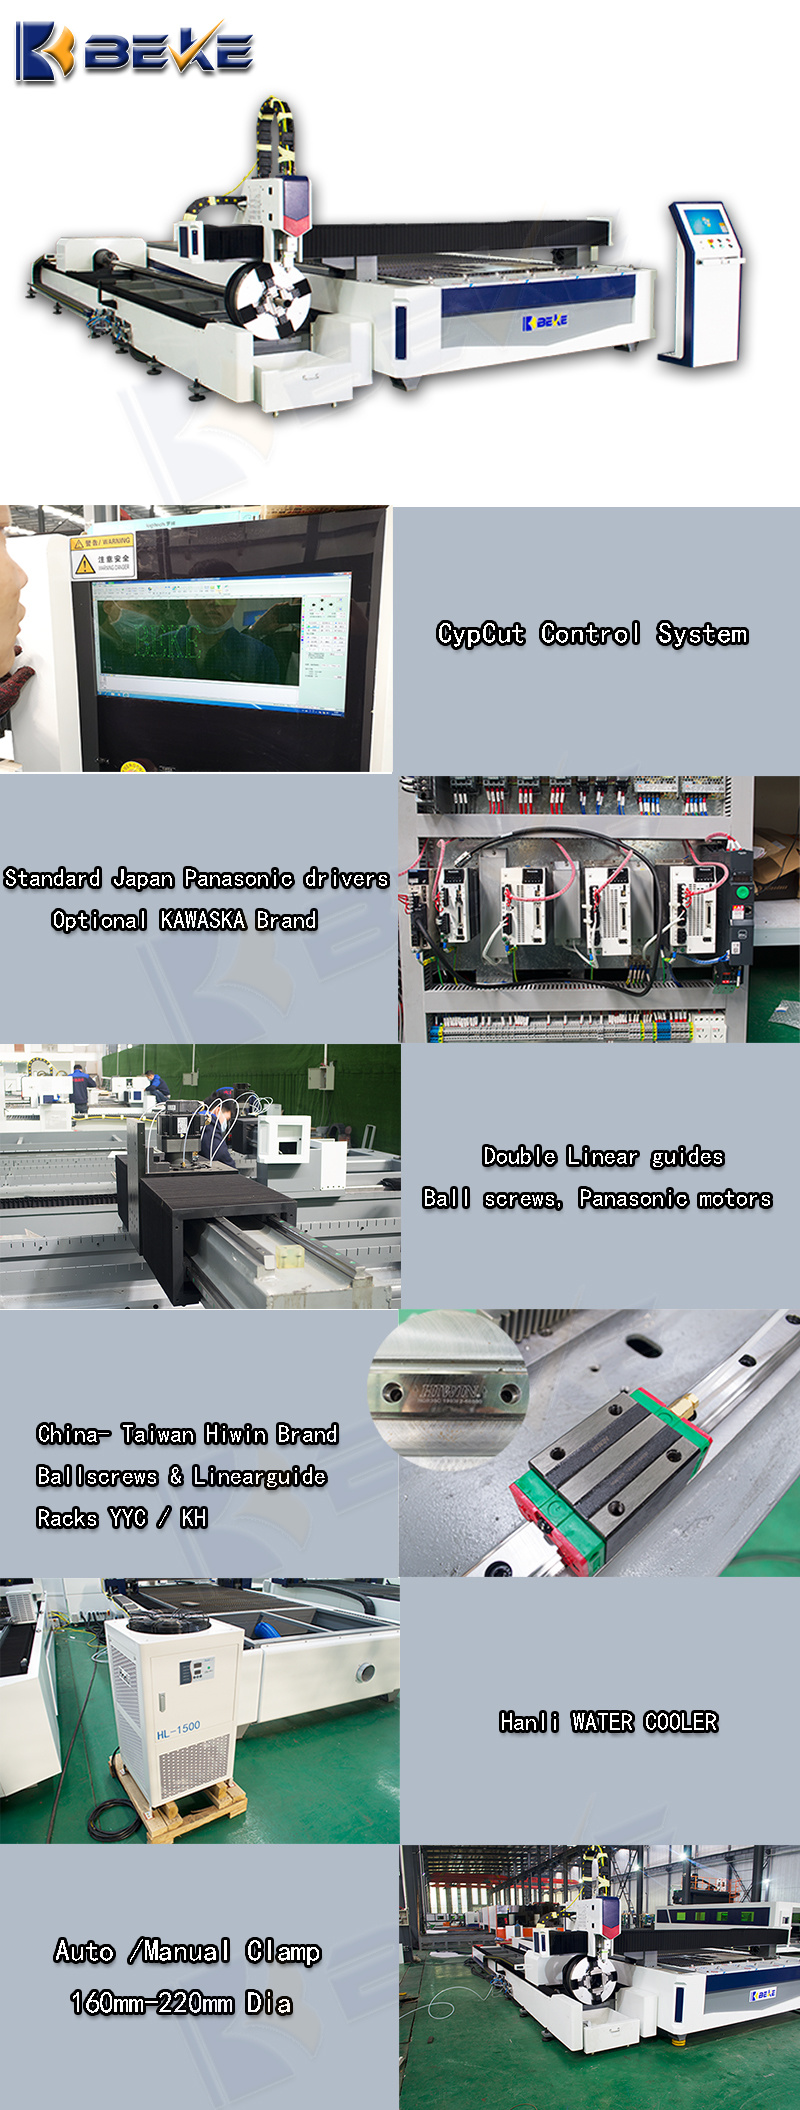 Bk4020 CNC Fiber Laser Cutter for Aluminum Sheet Fiber Laser Cutting Machine